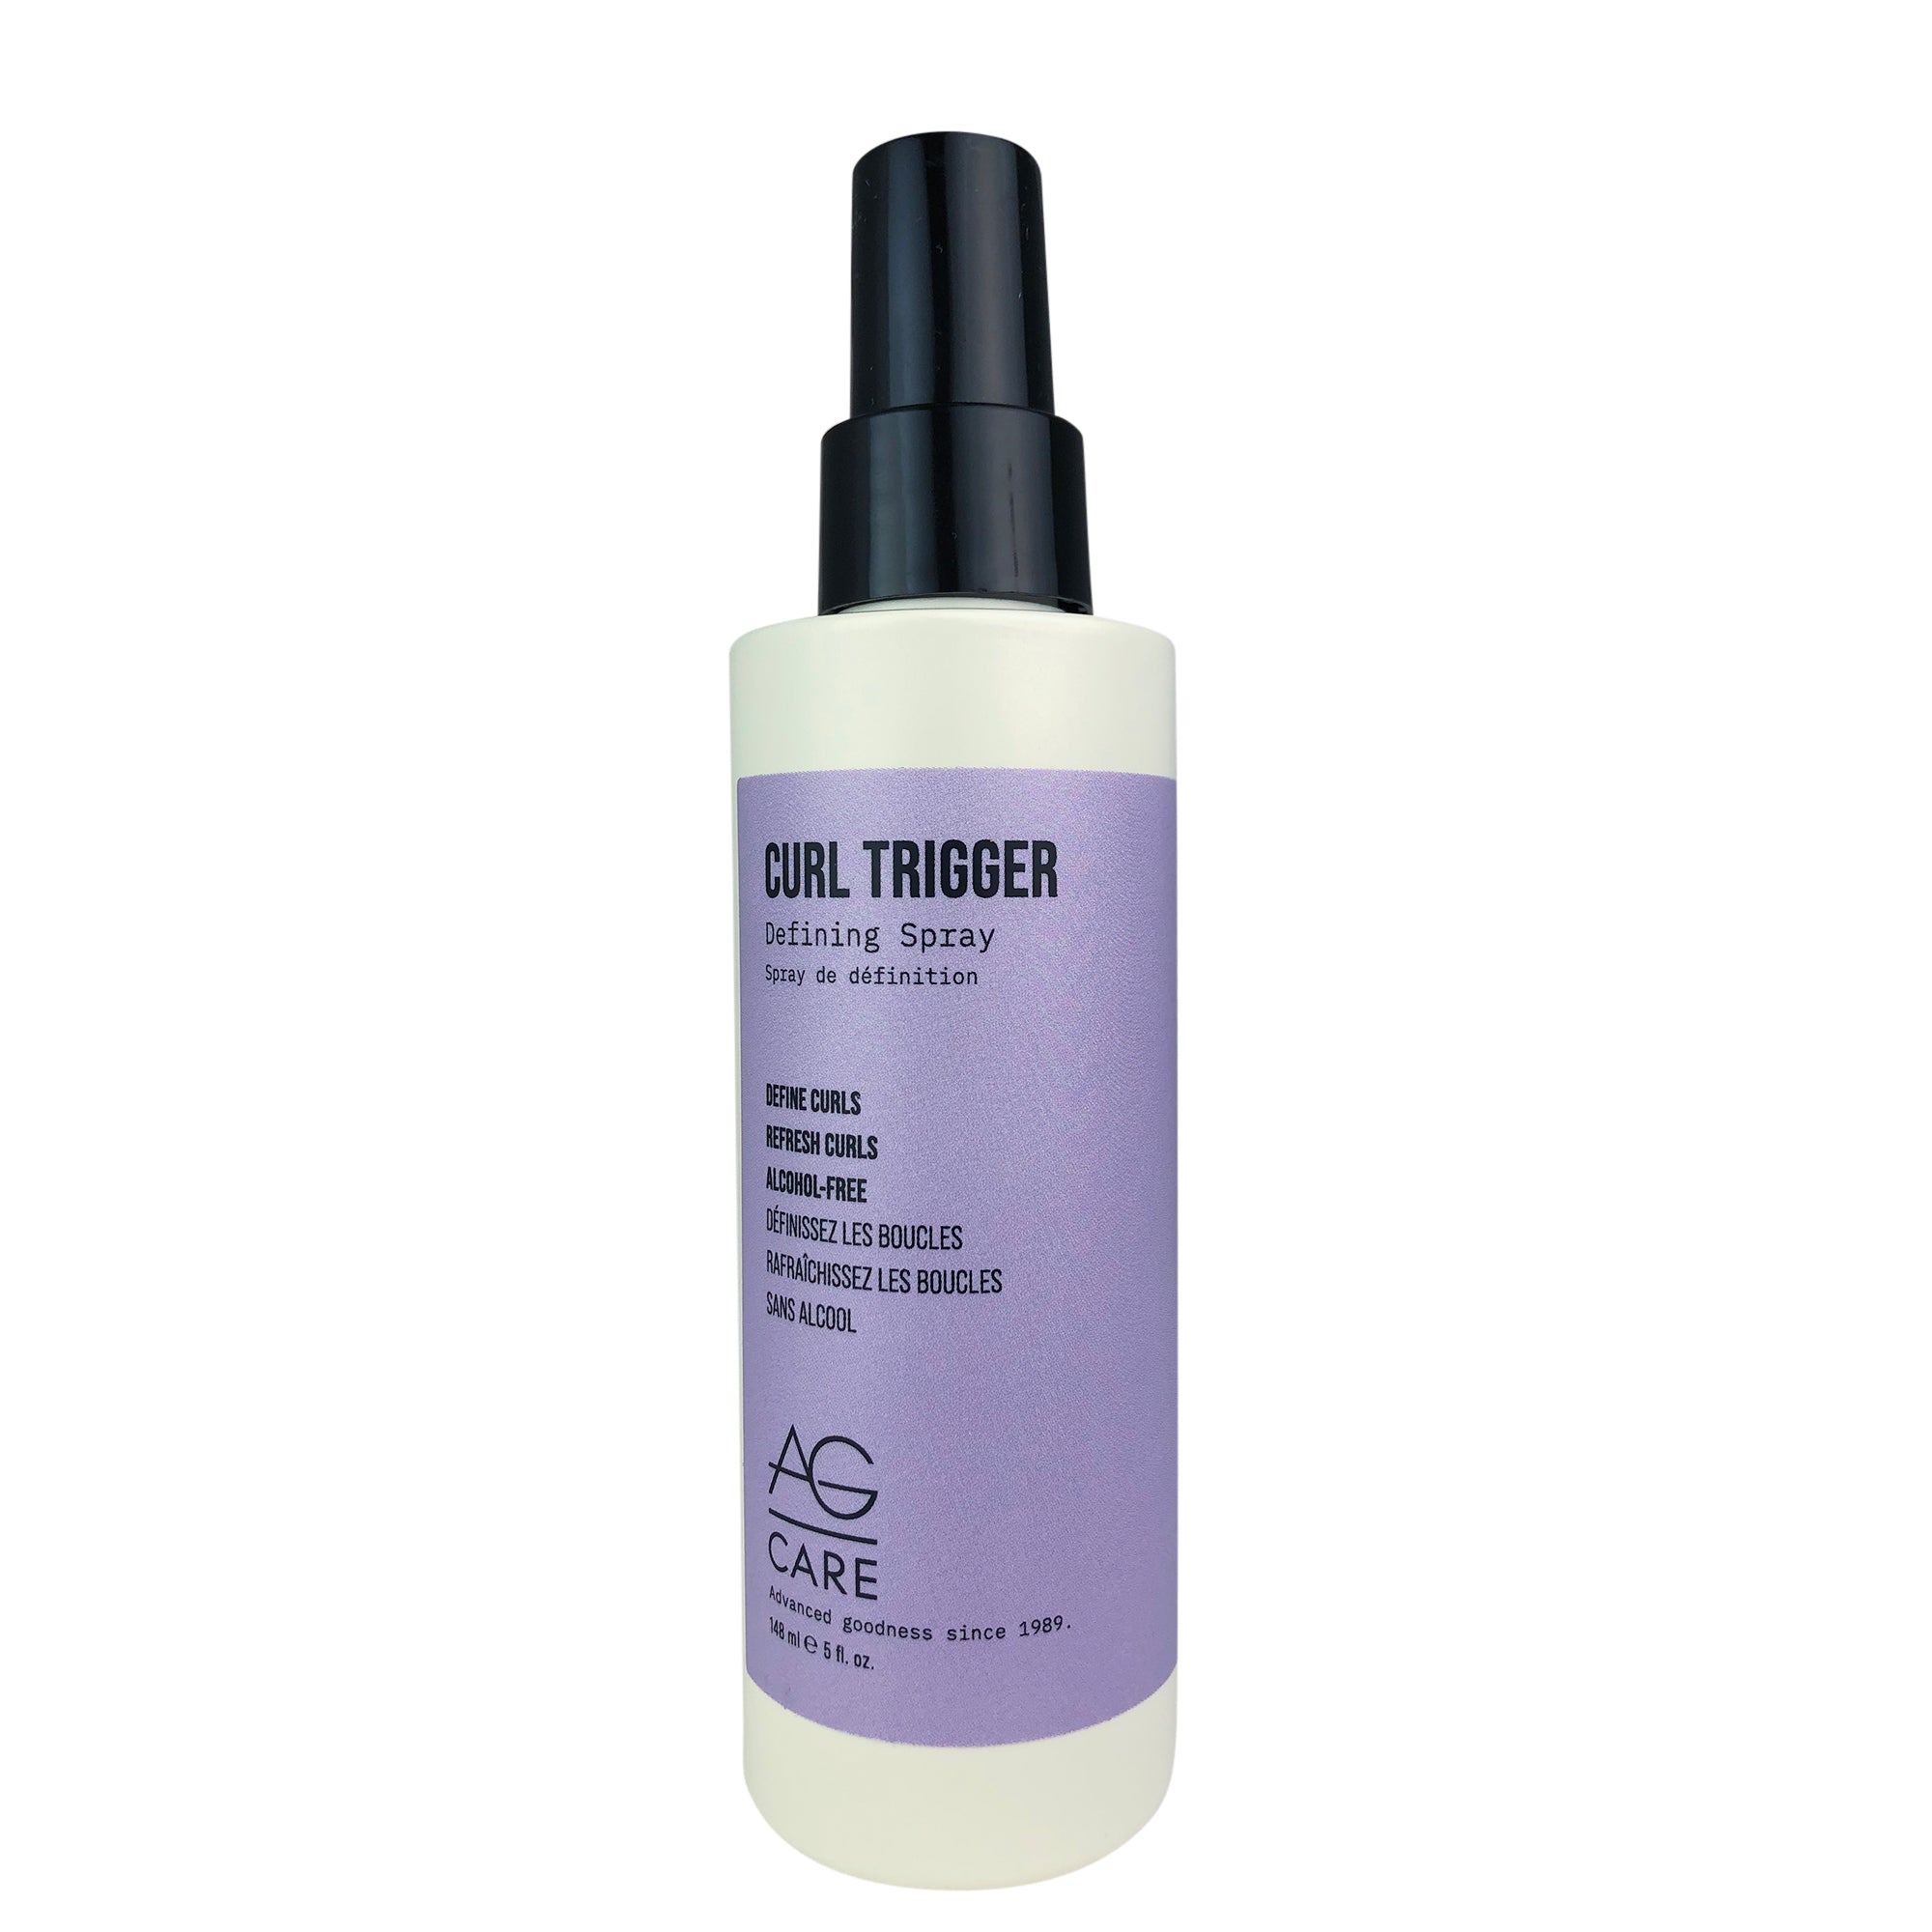 AG Hair Care Curl Trigger Curl Defining Spray